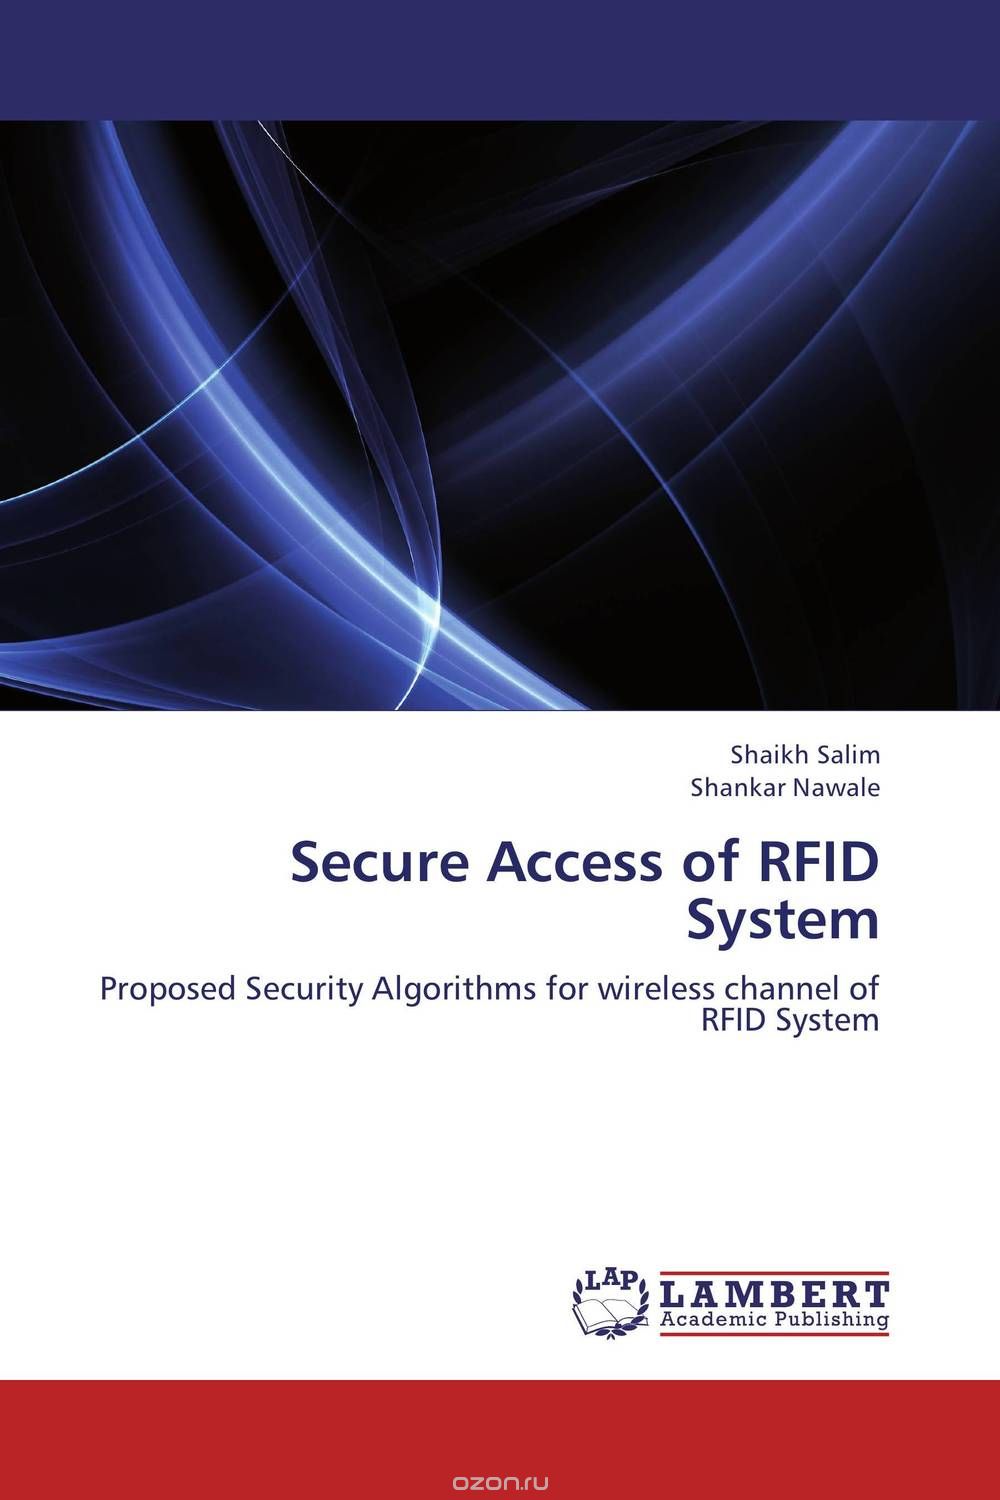 Скачать книгу "Secure Access of RFID System"